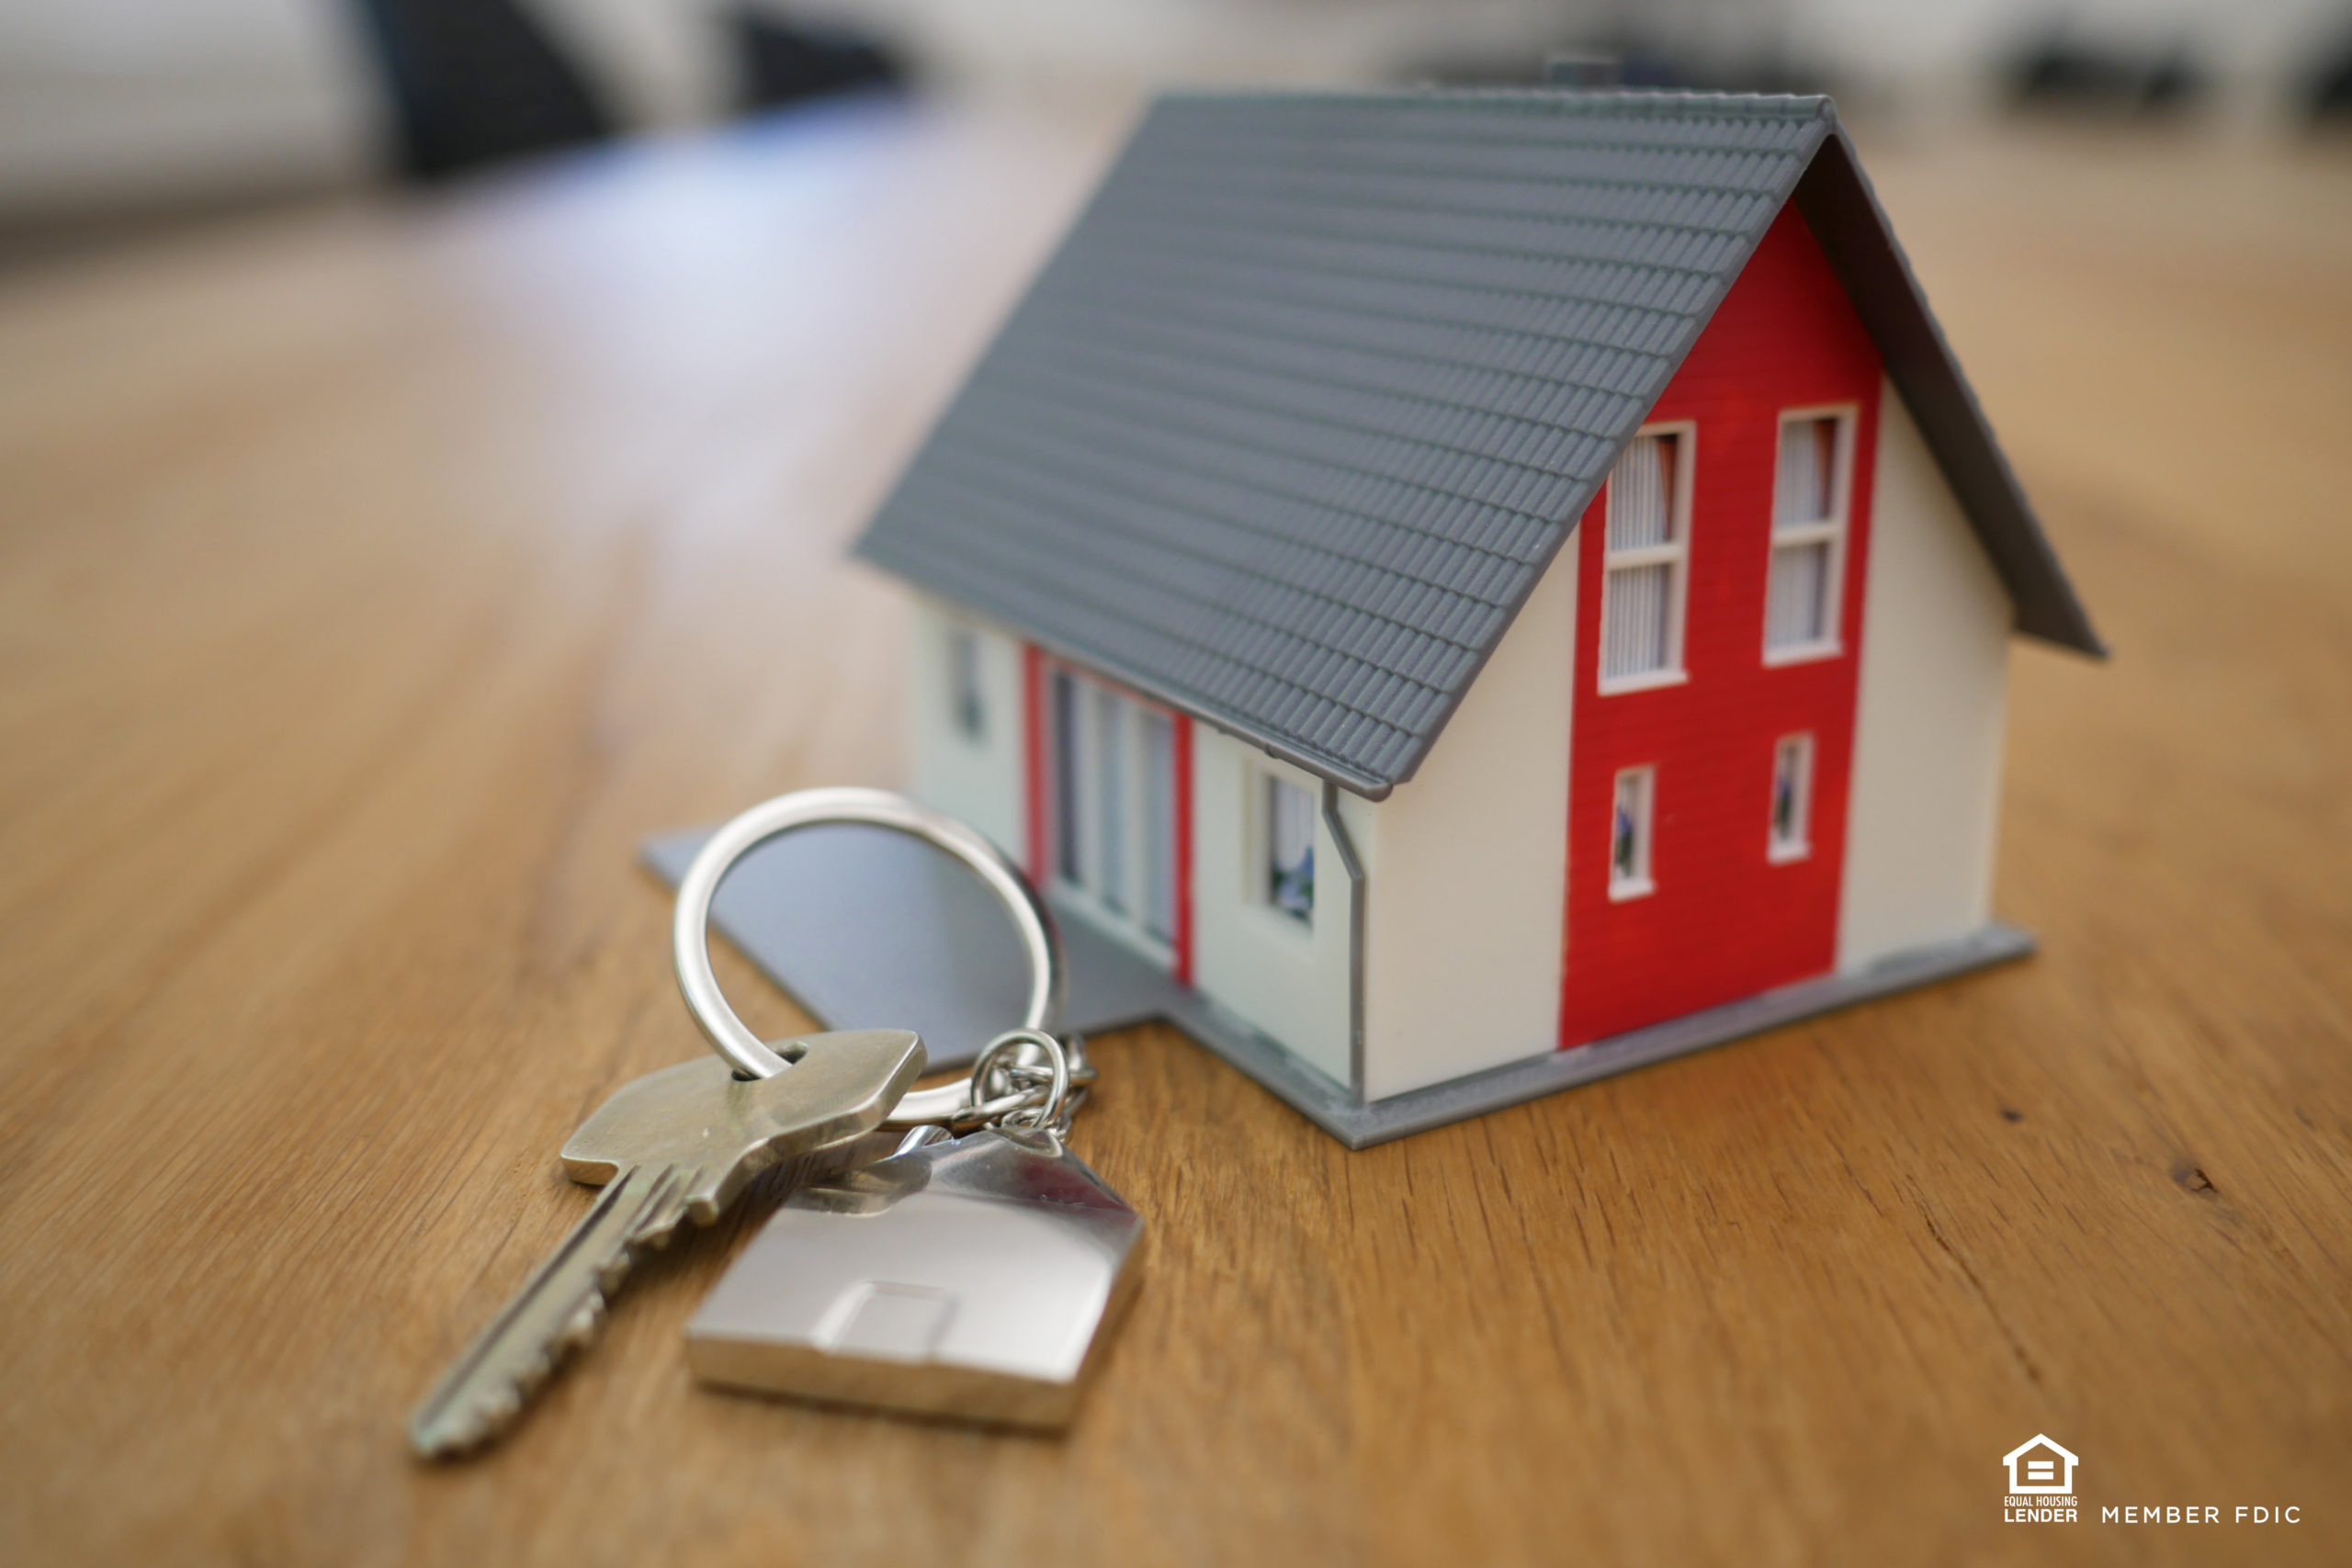 miniature replica of a house and set of keys